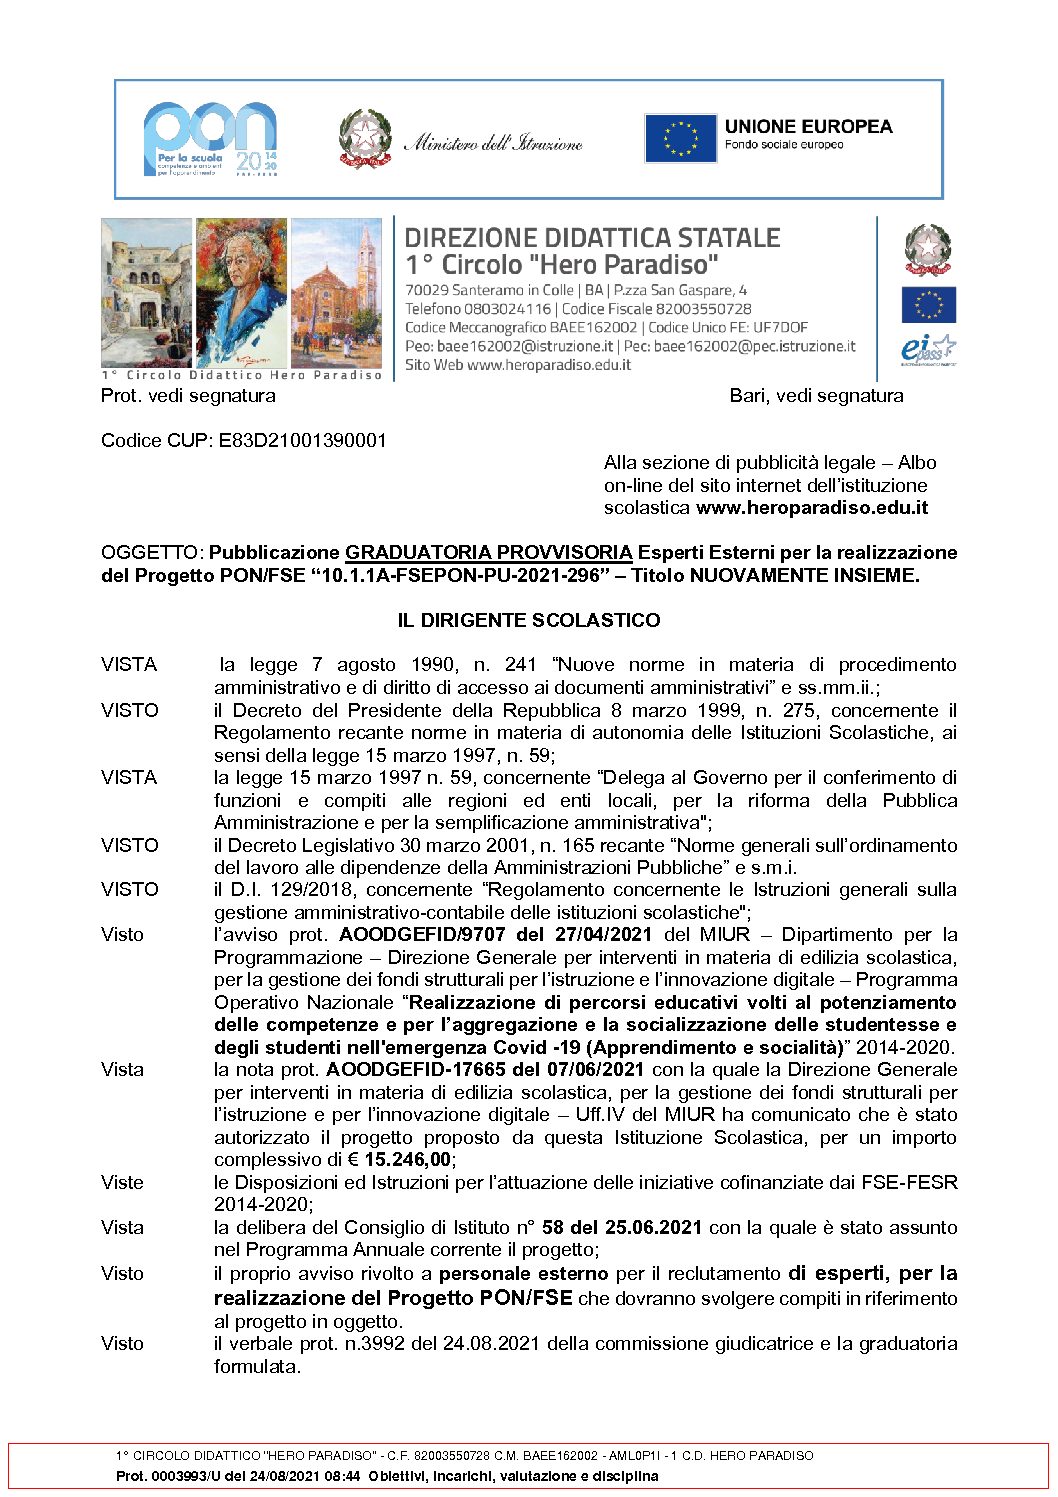 4._Graduatoria_provvisoria_esperti_esterni_2021-296.pdf.pades